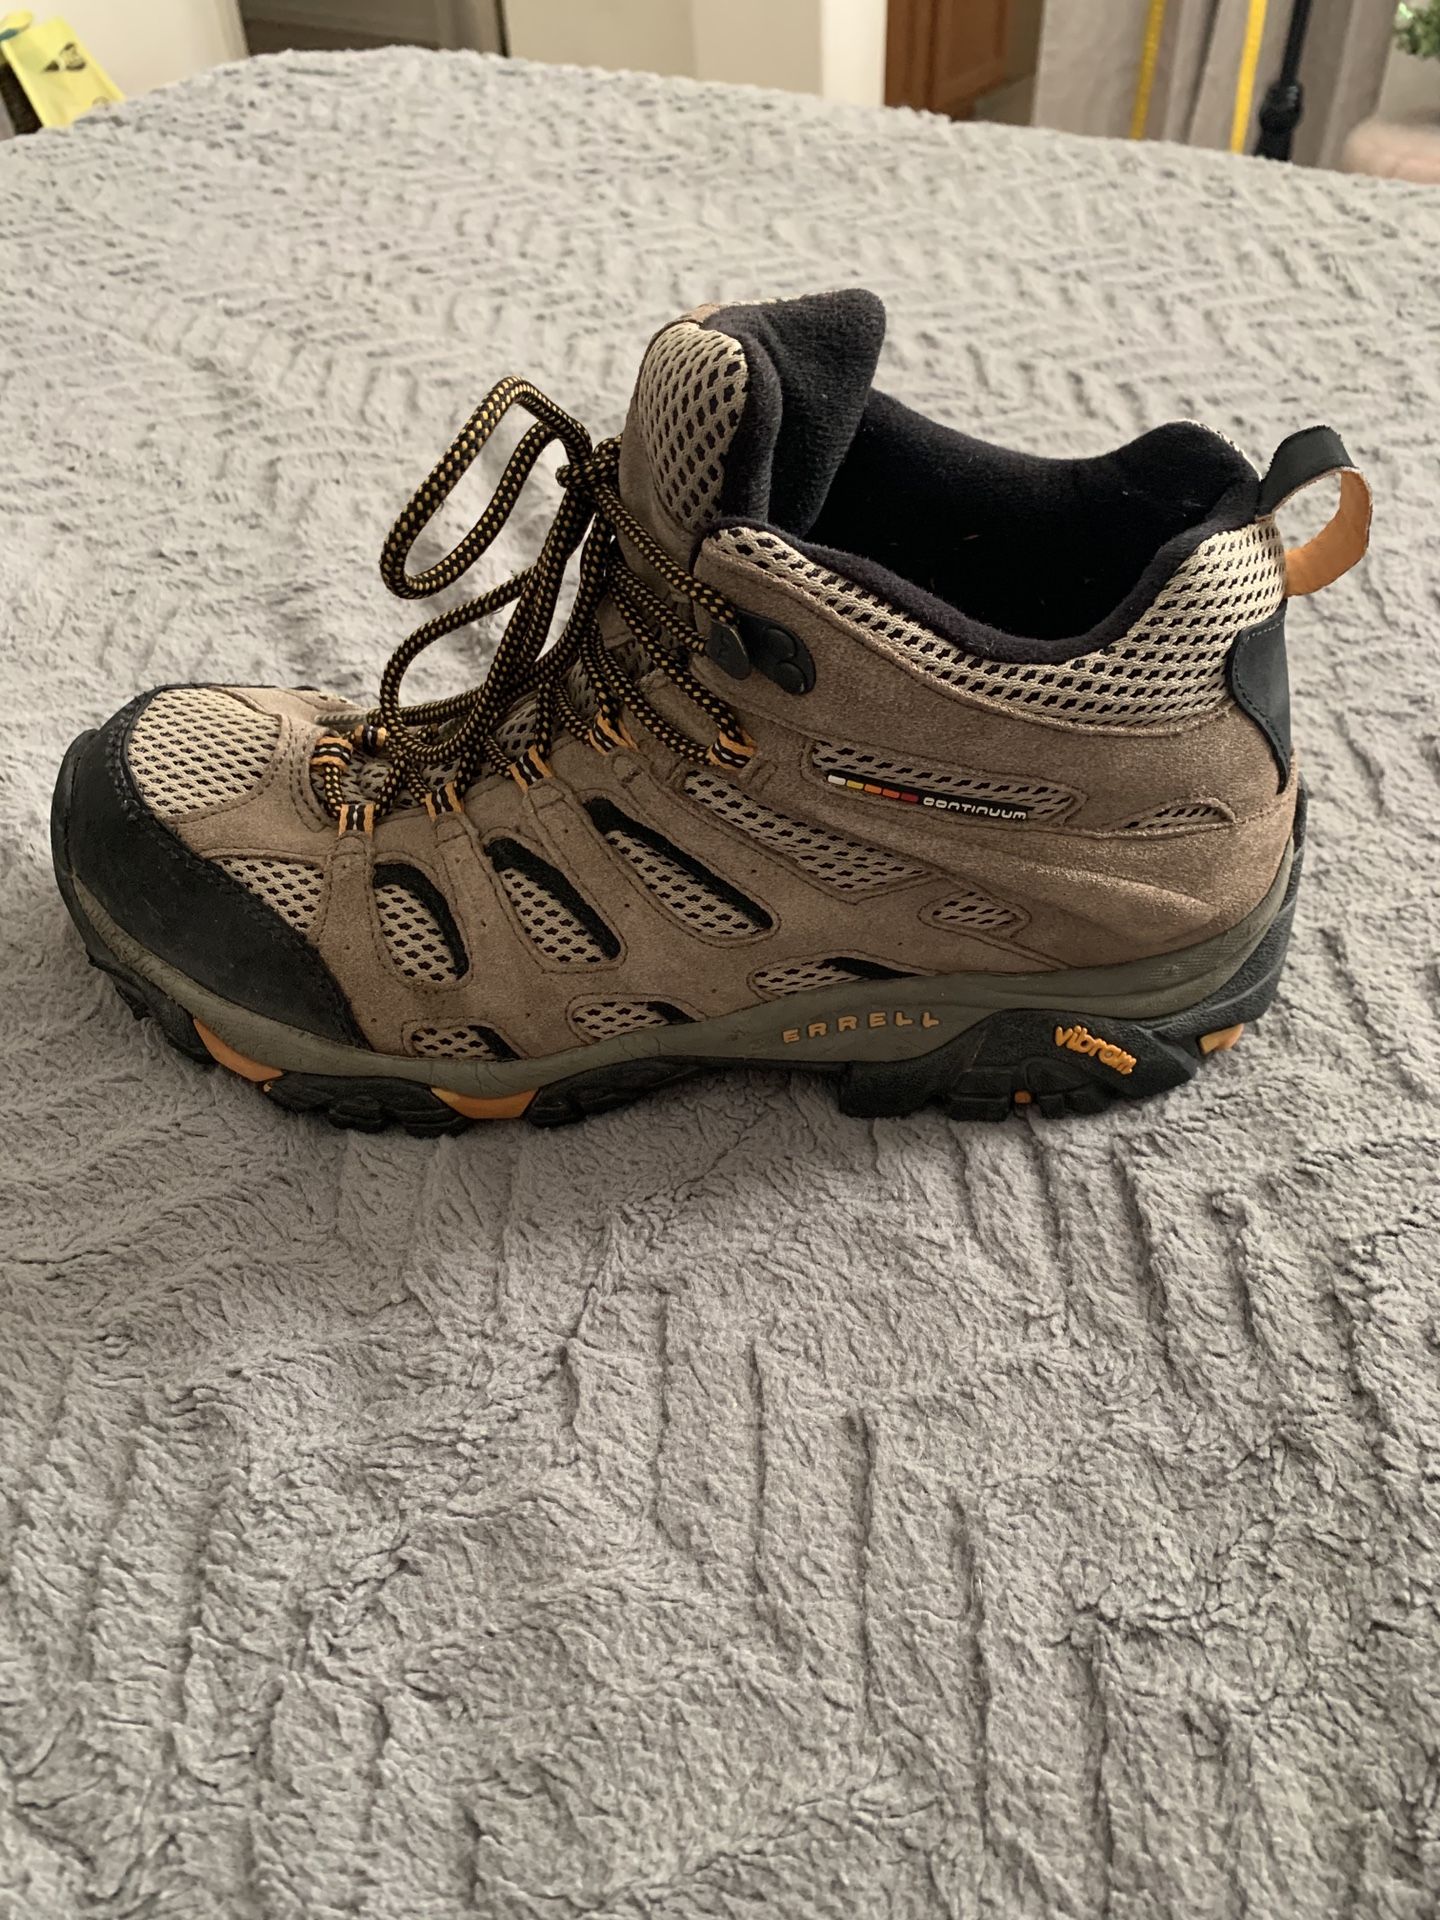 Merrell - Moab Mid Ventilator Hiking Boots Size 11